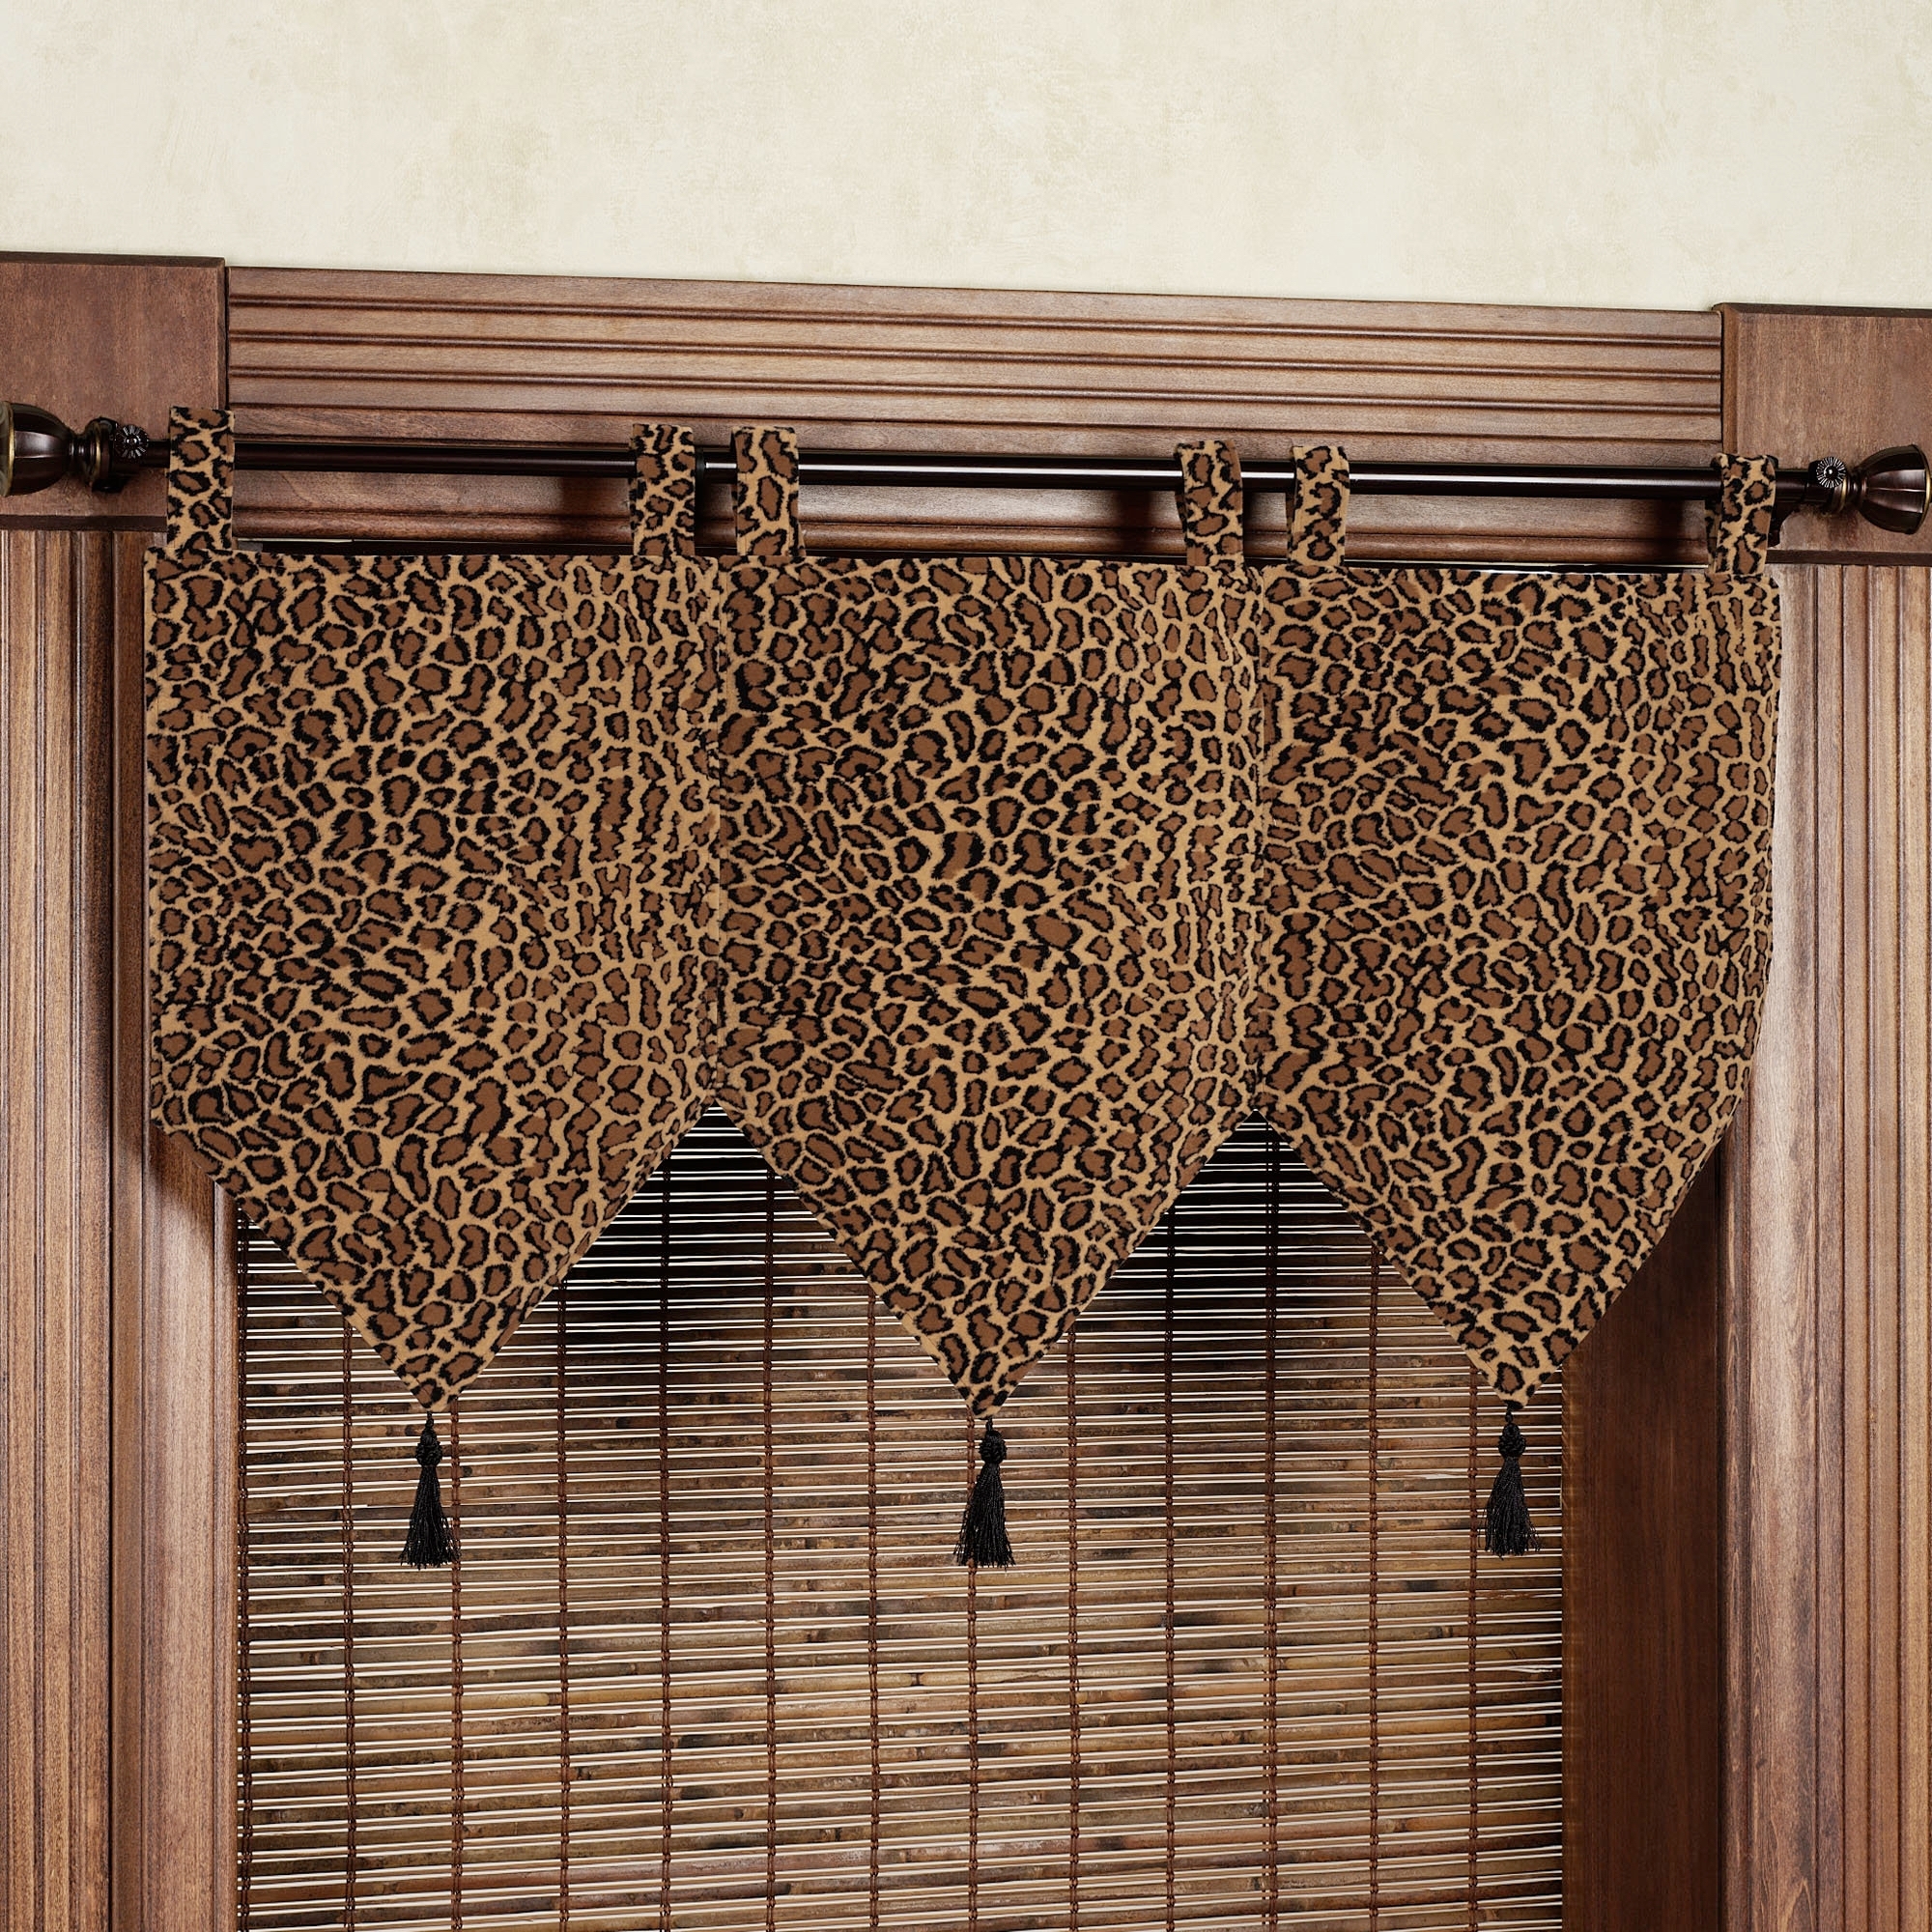 Animal print curtains